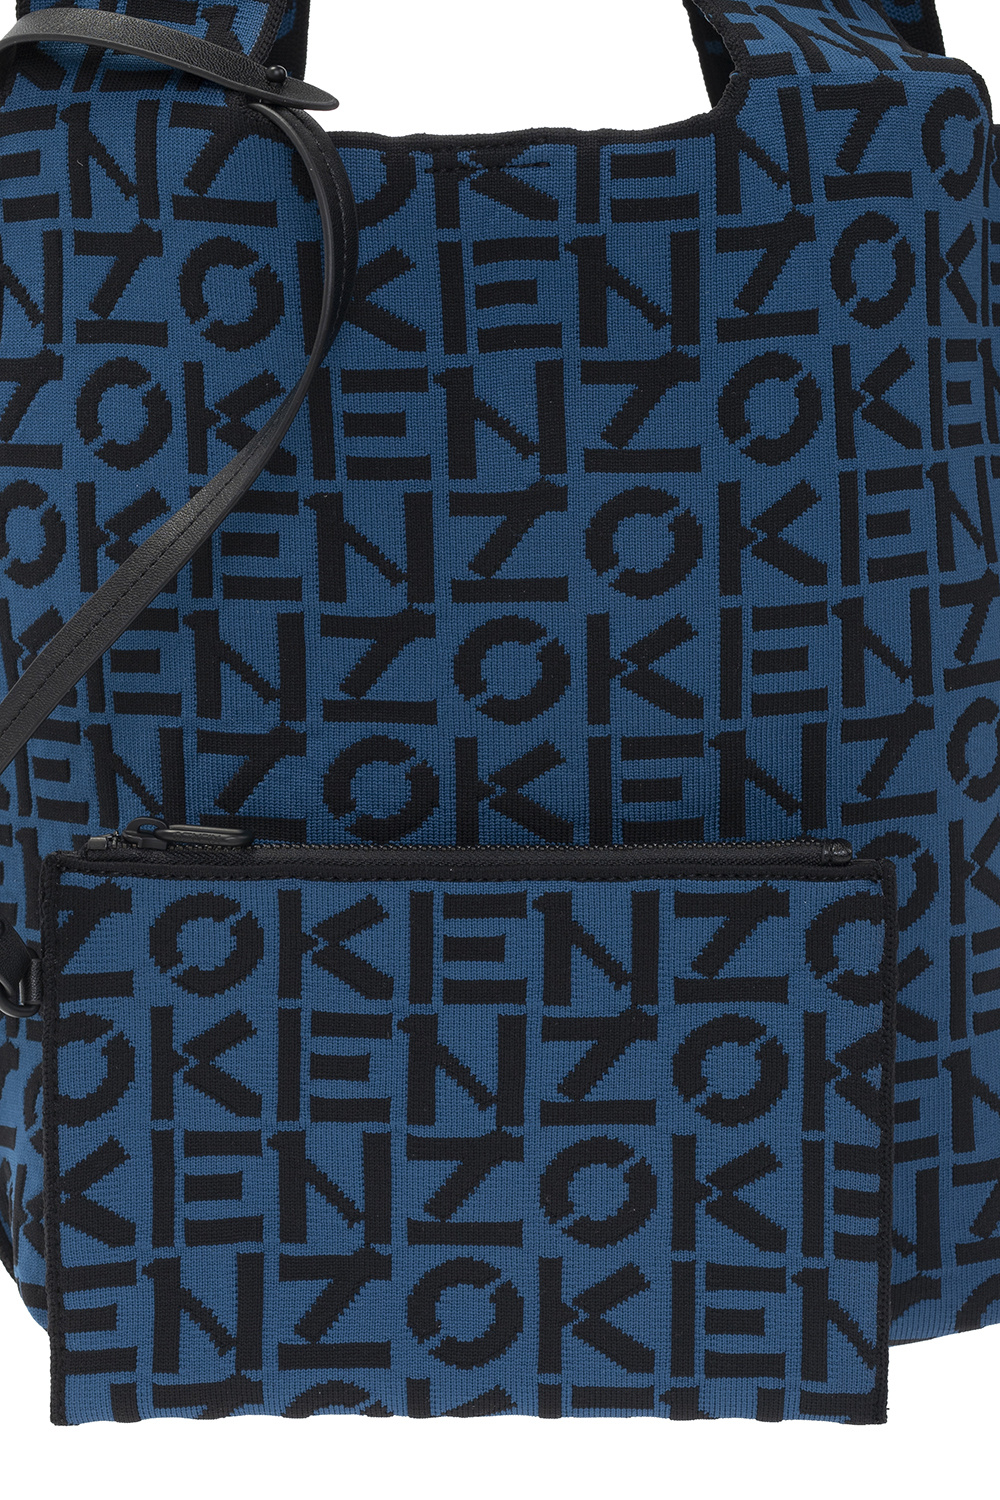 Kenzo Shopper Bandoliera bag